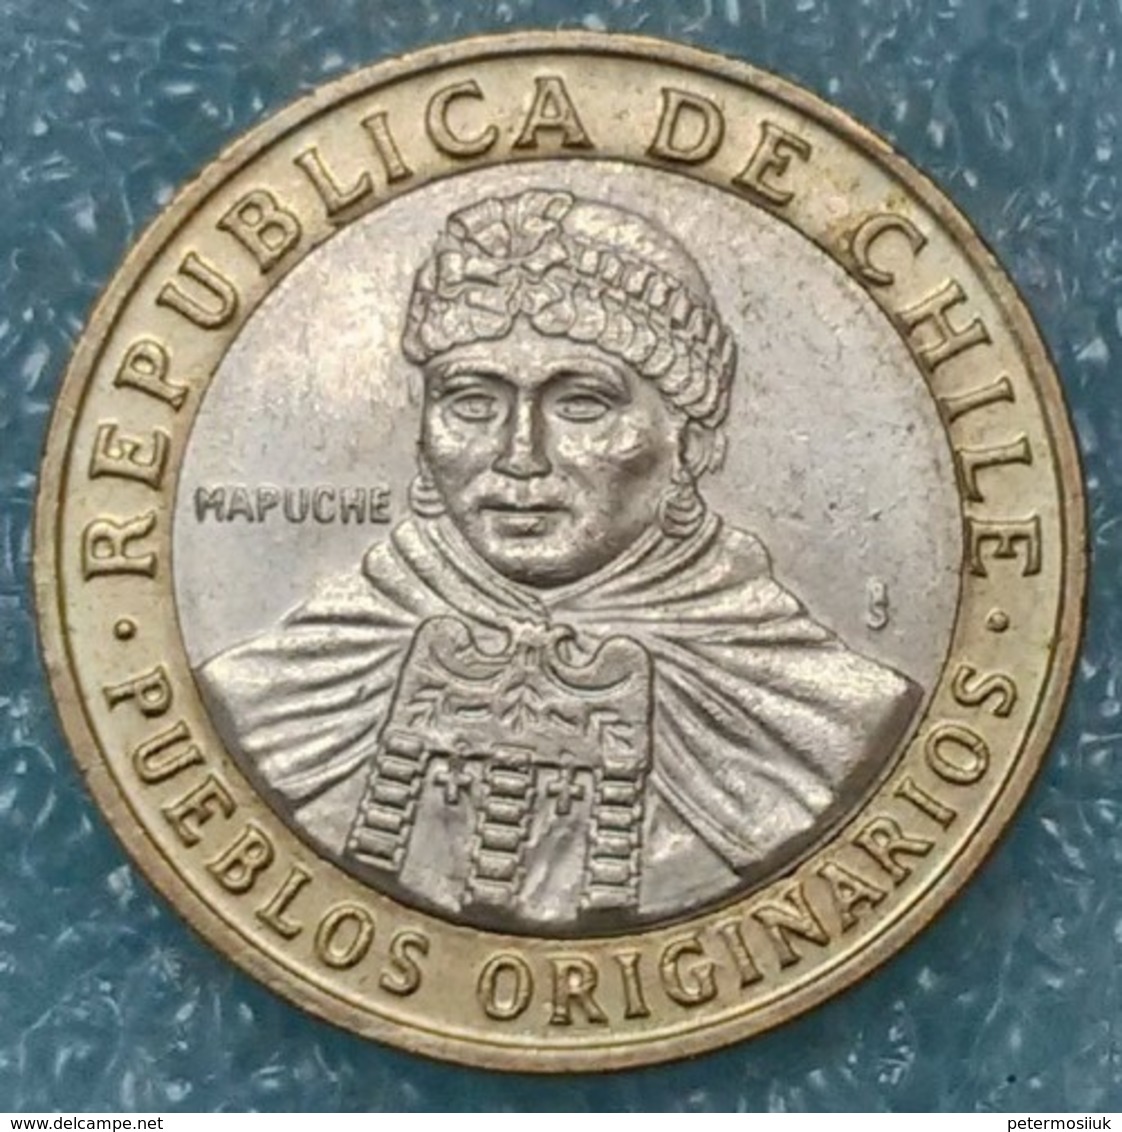 Chile 100 Pesos, 2010 ↓price↓ - Chile